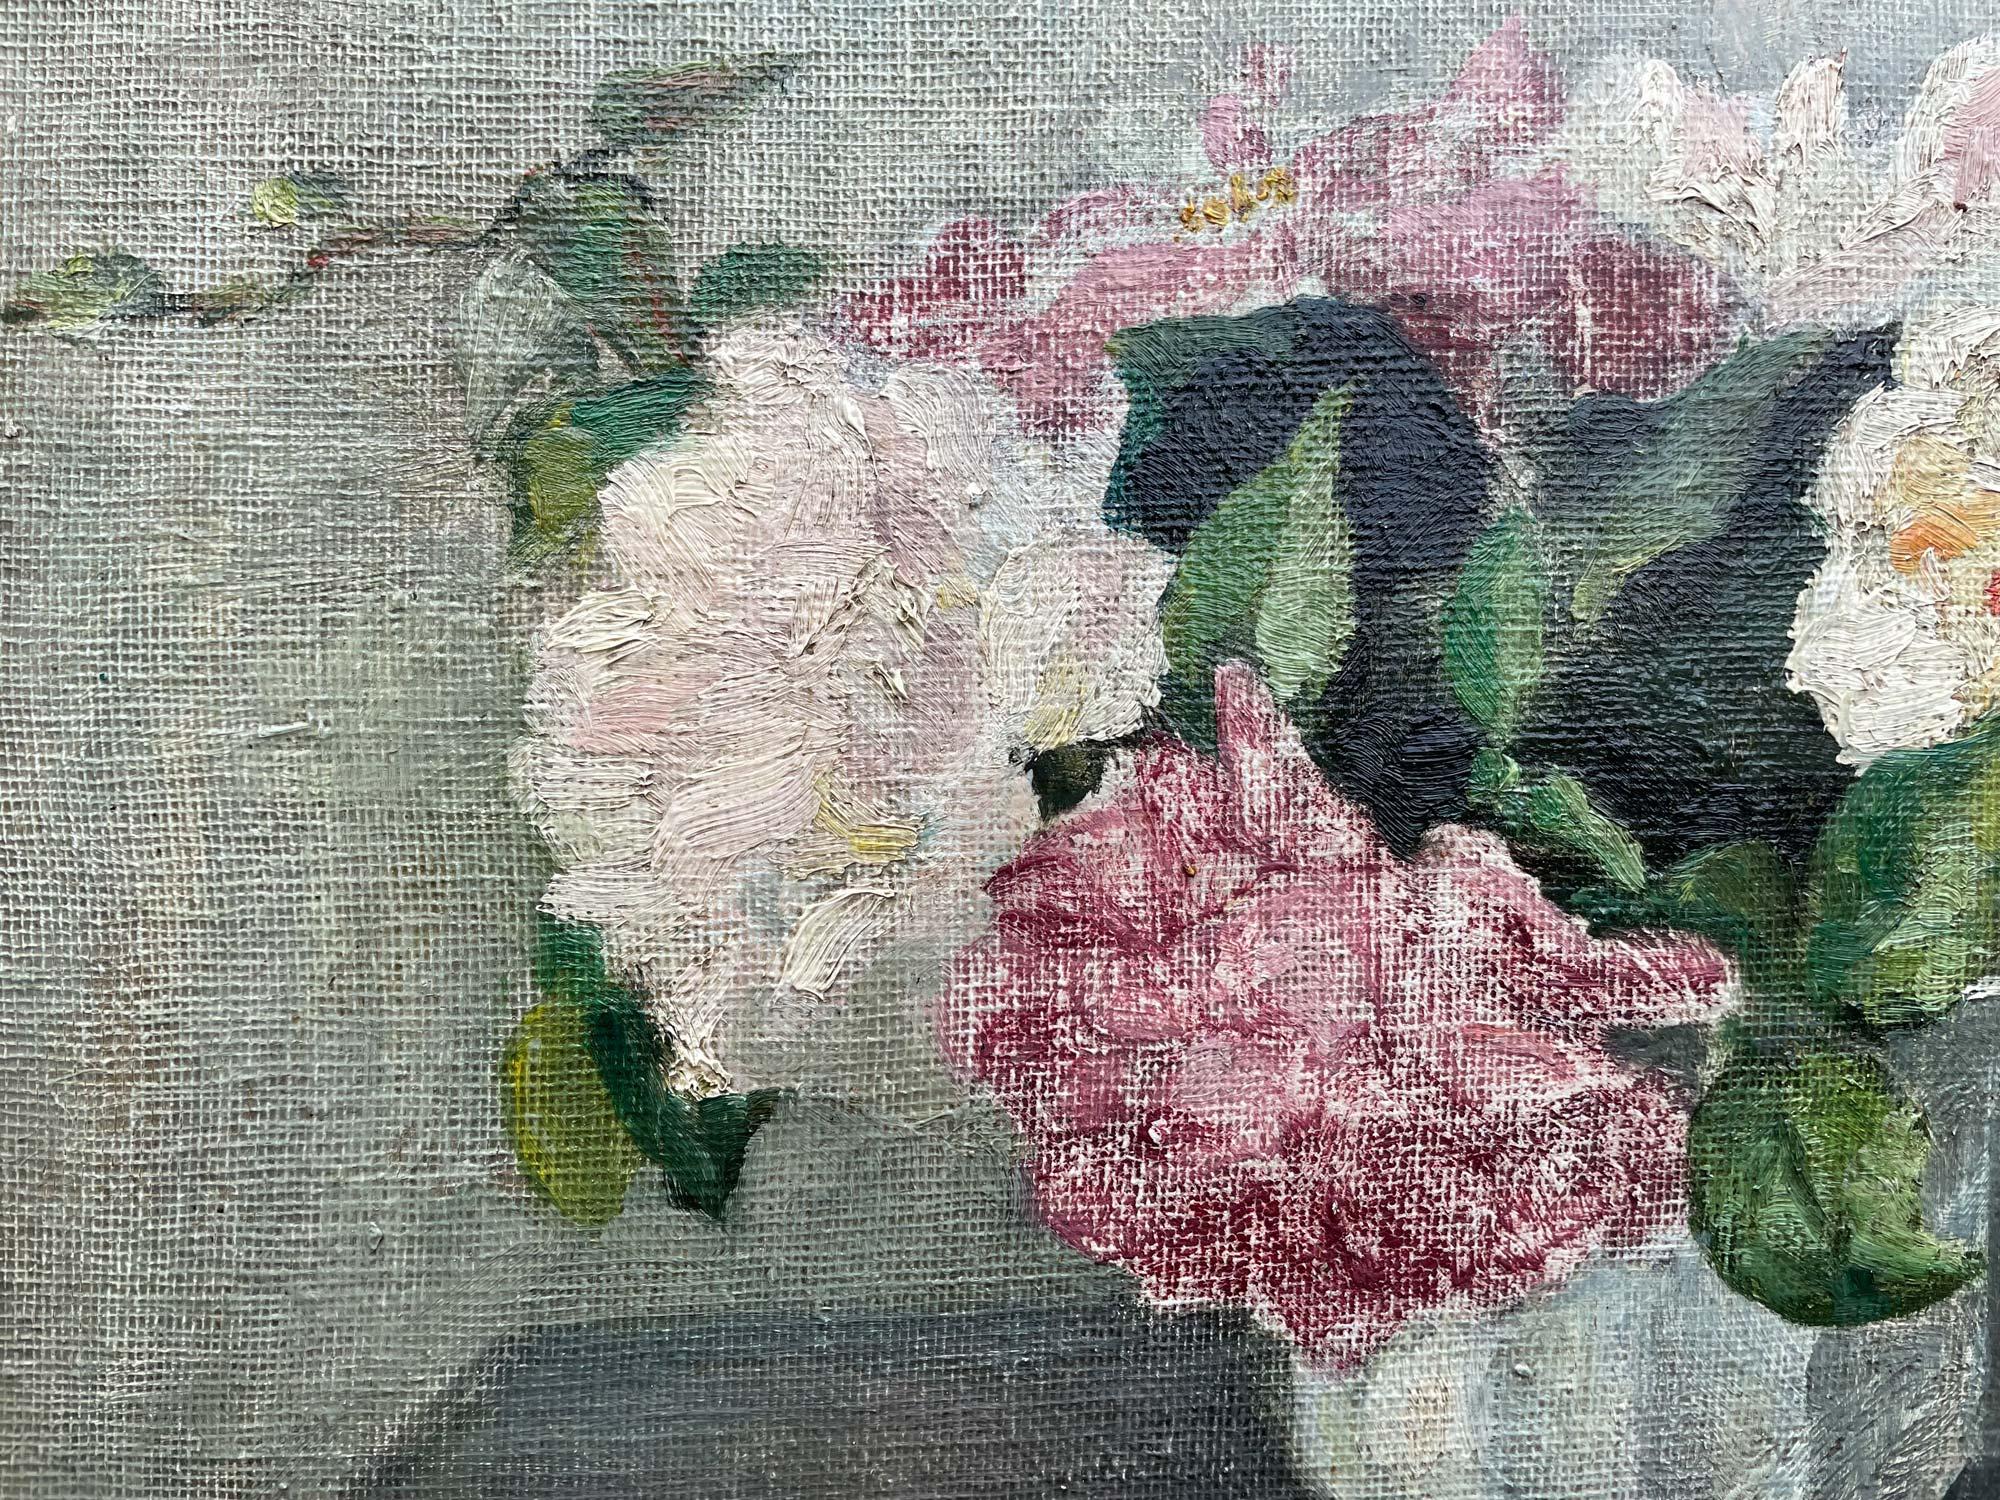 German Roses Painting, Létourneux Yvonne Oil on Canvas, France 1950